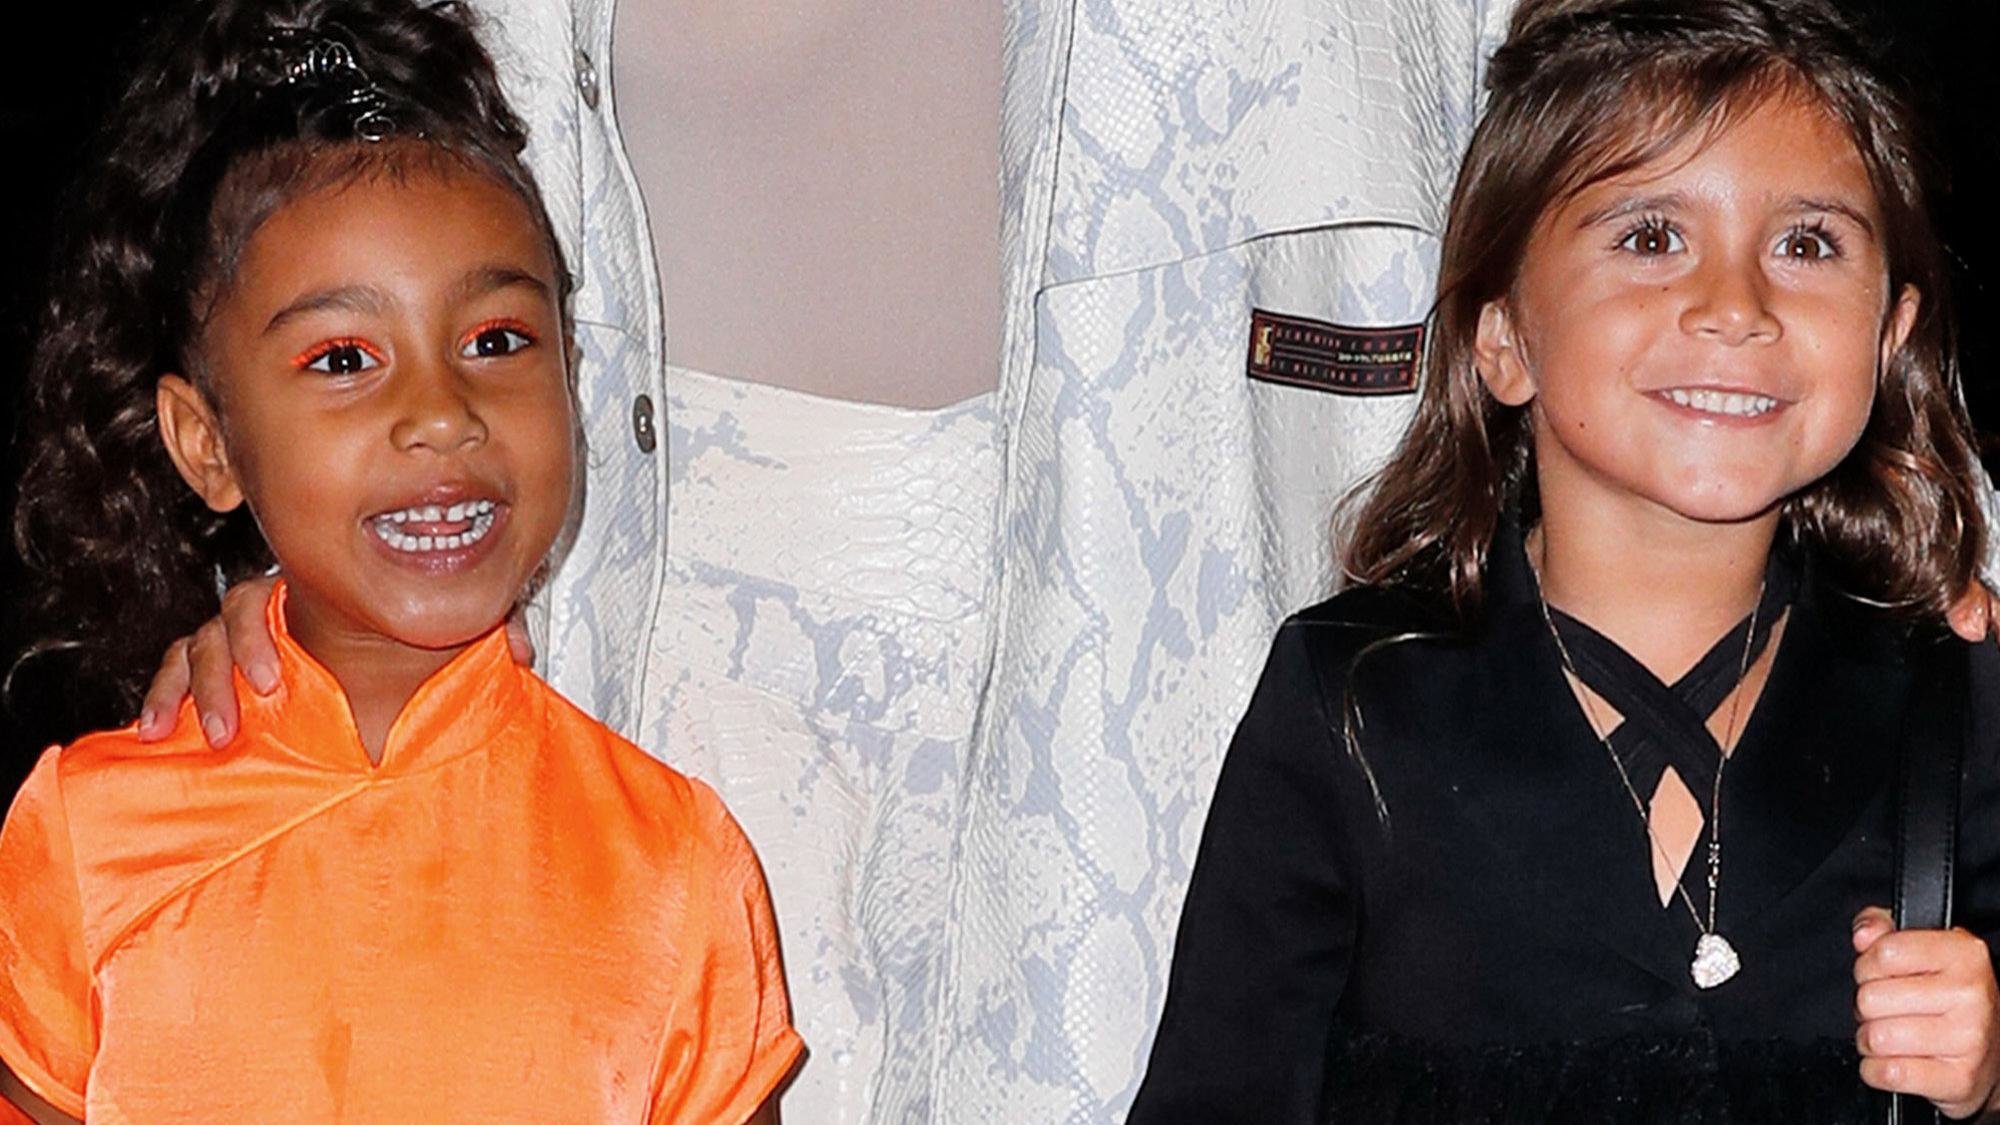 Kourtney Kardashian's daughter, Penelope, Gucci loafers school like it's no big deal